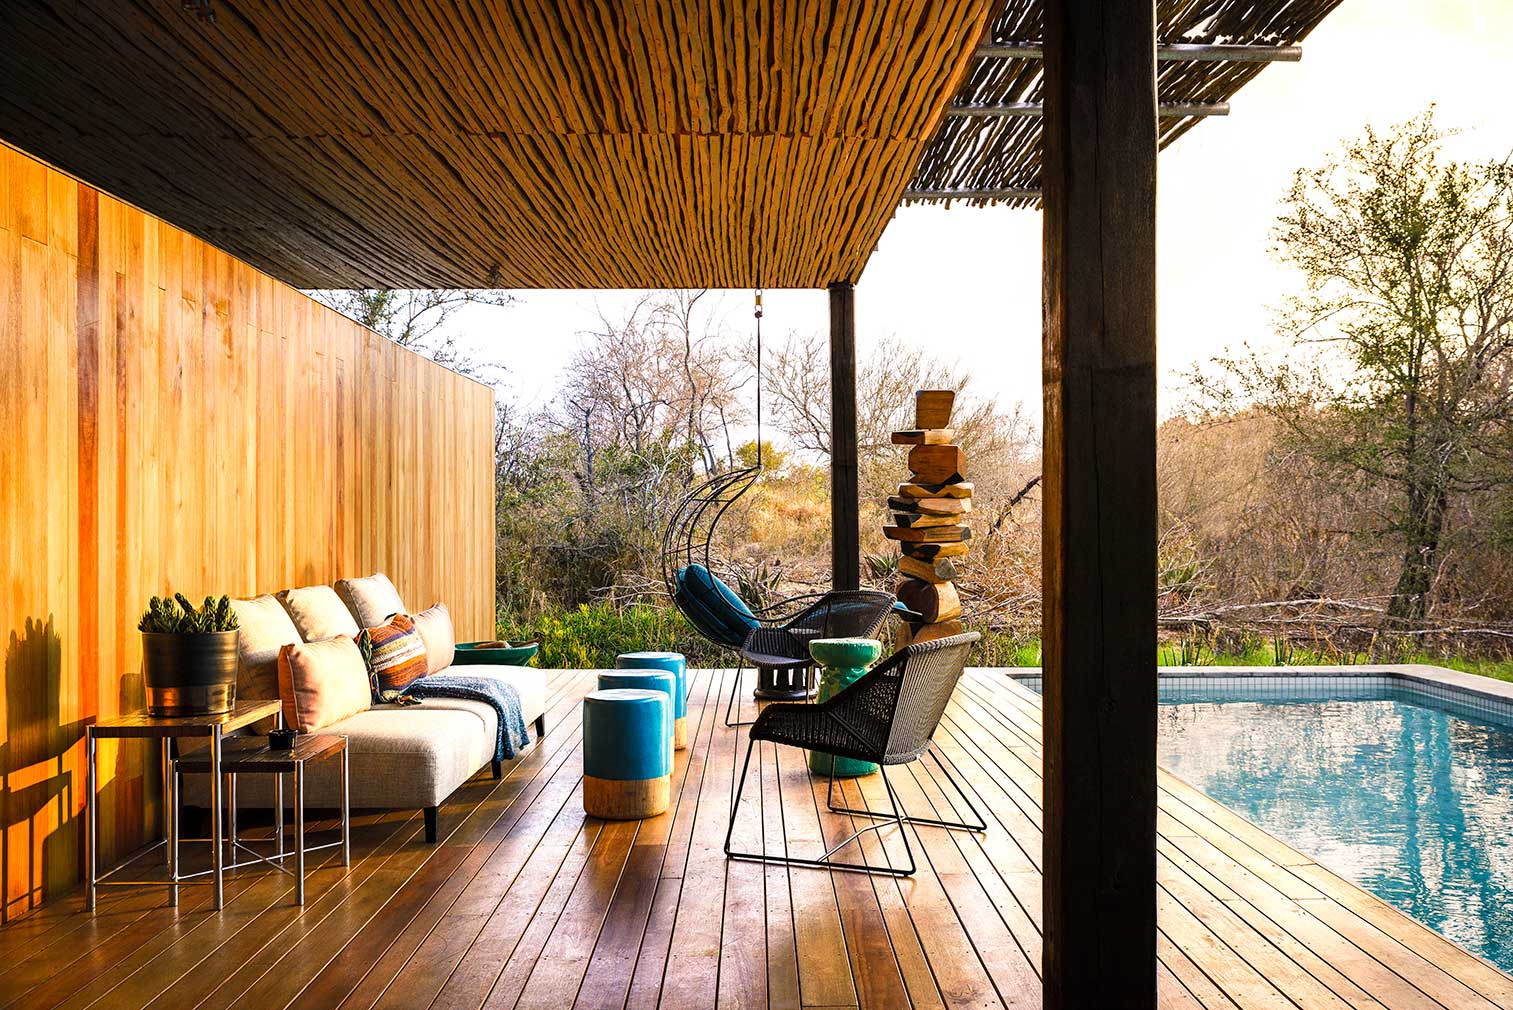 Singita Sweni safari lodge in South Africa, designed by Cecile and Boyd